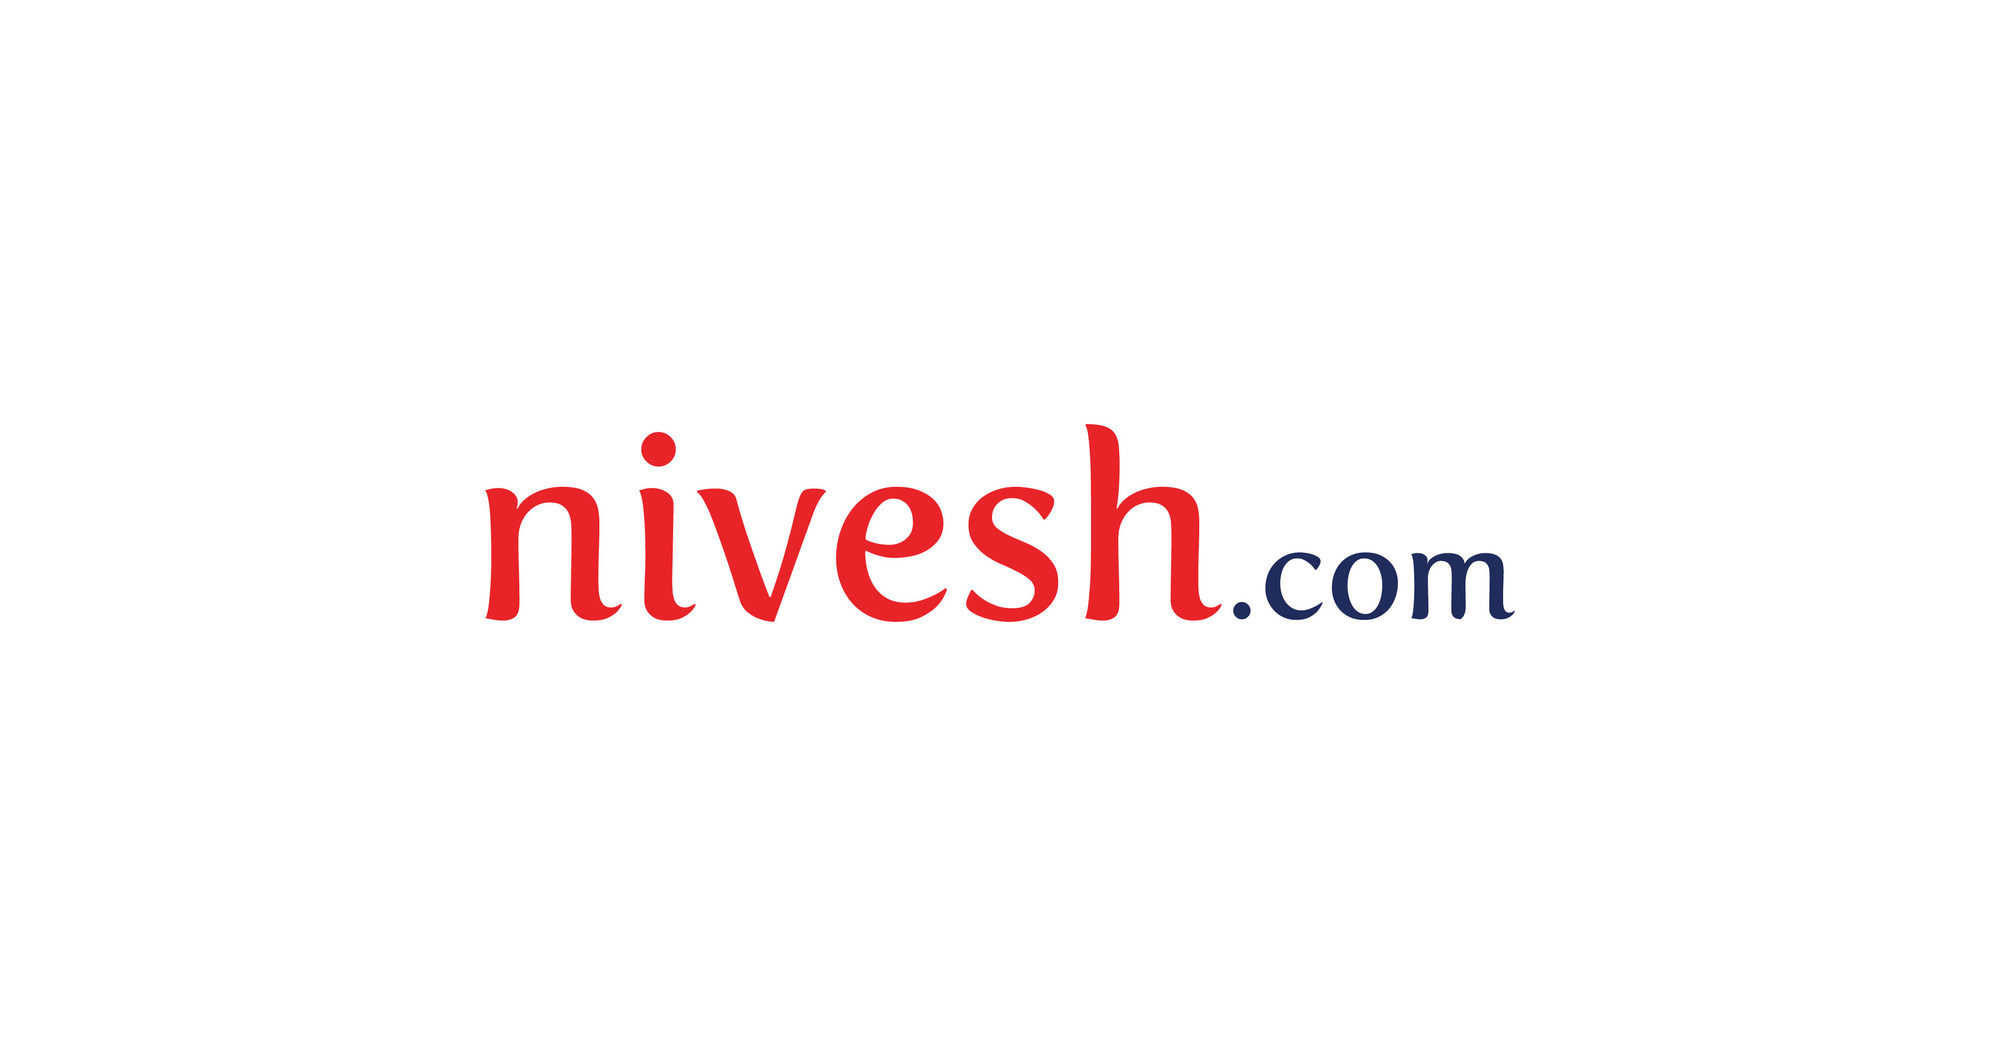 Nivesh.com Helps Financial Advisors Thrive During COVID-19